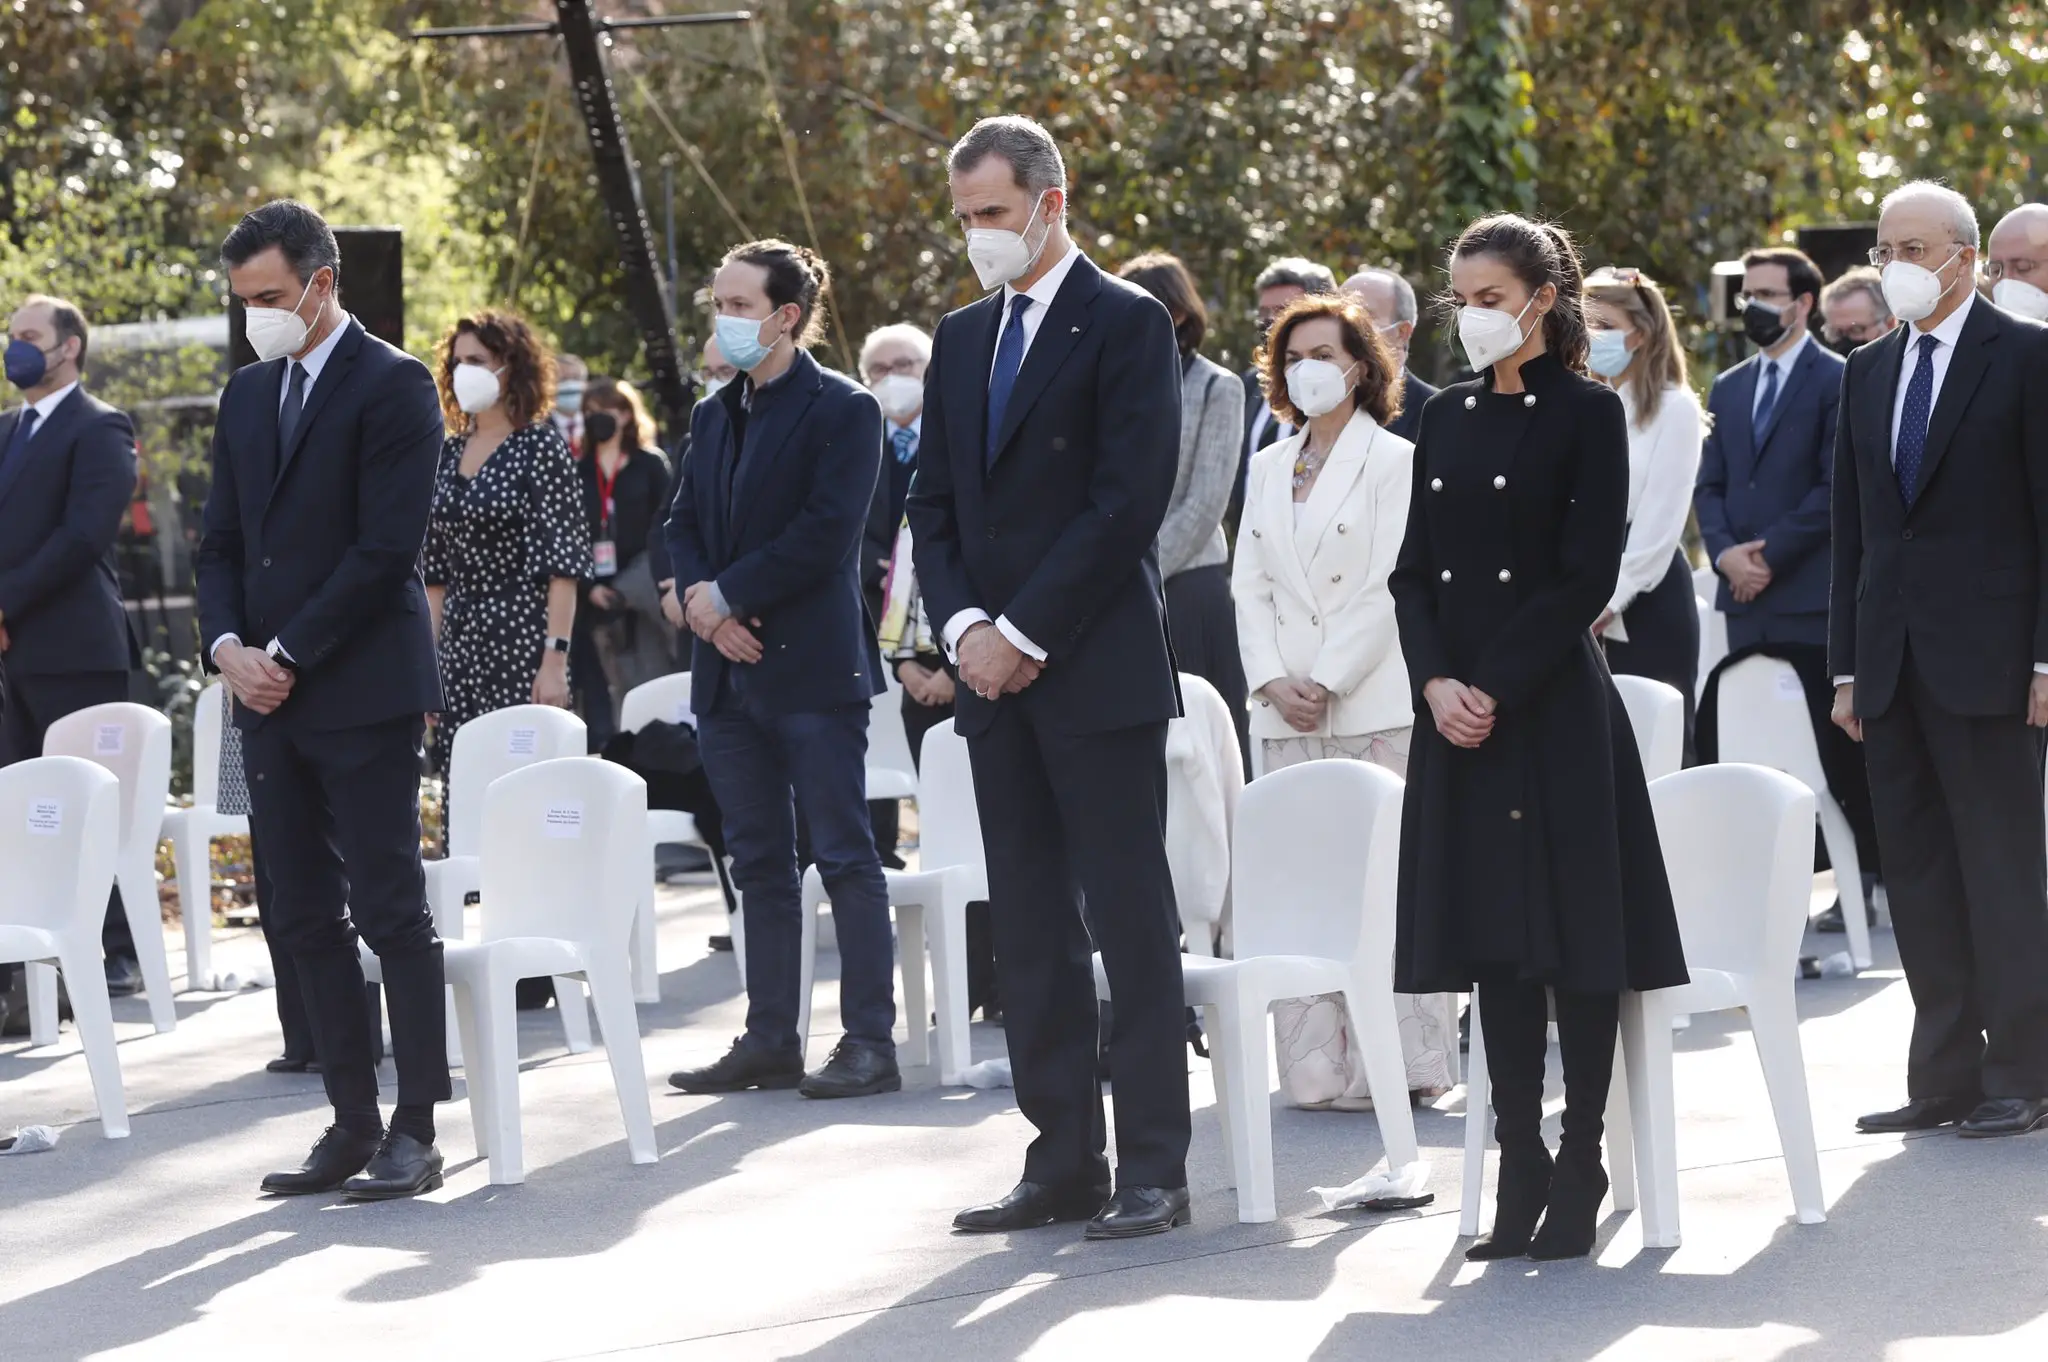 Queen Letizia in all black lookfor Memorial service for the victims of Terrorism